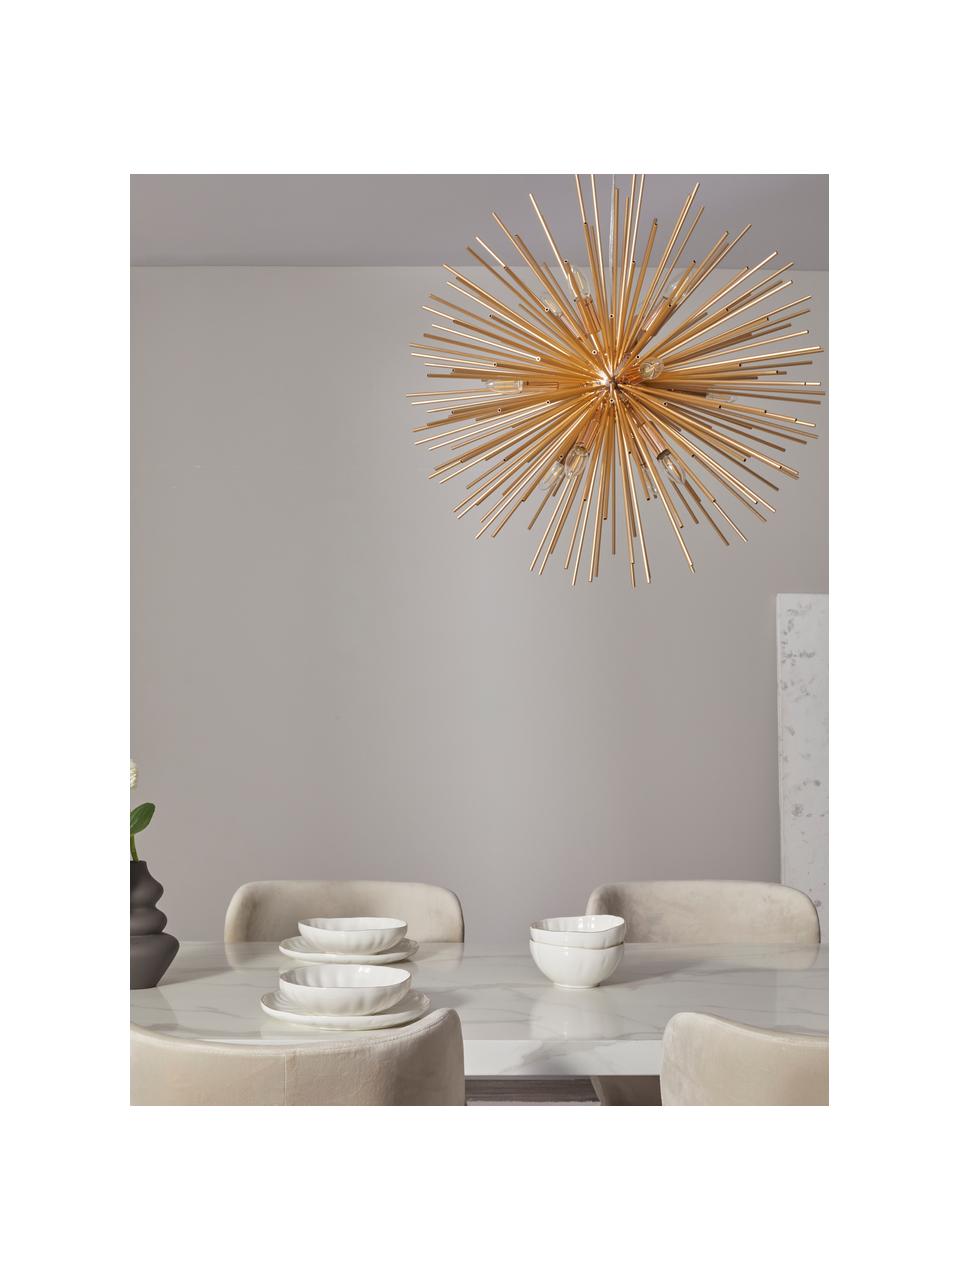 Grote design hanglamp Soleil, Goudkleurig, Ø 72 cm